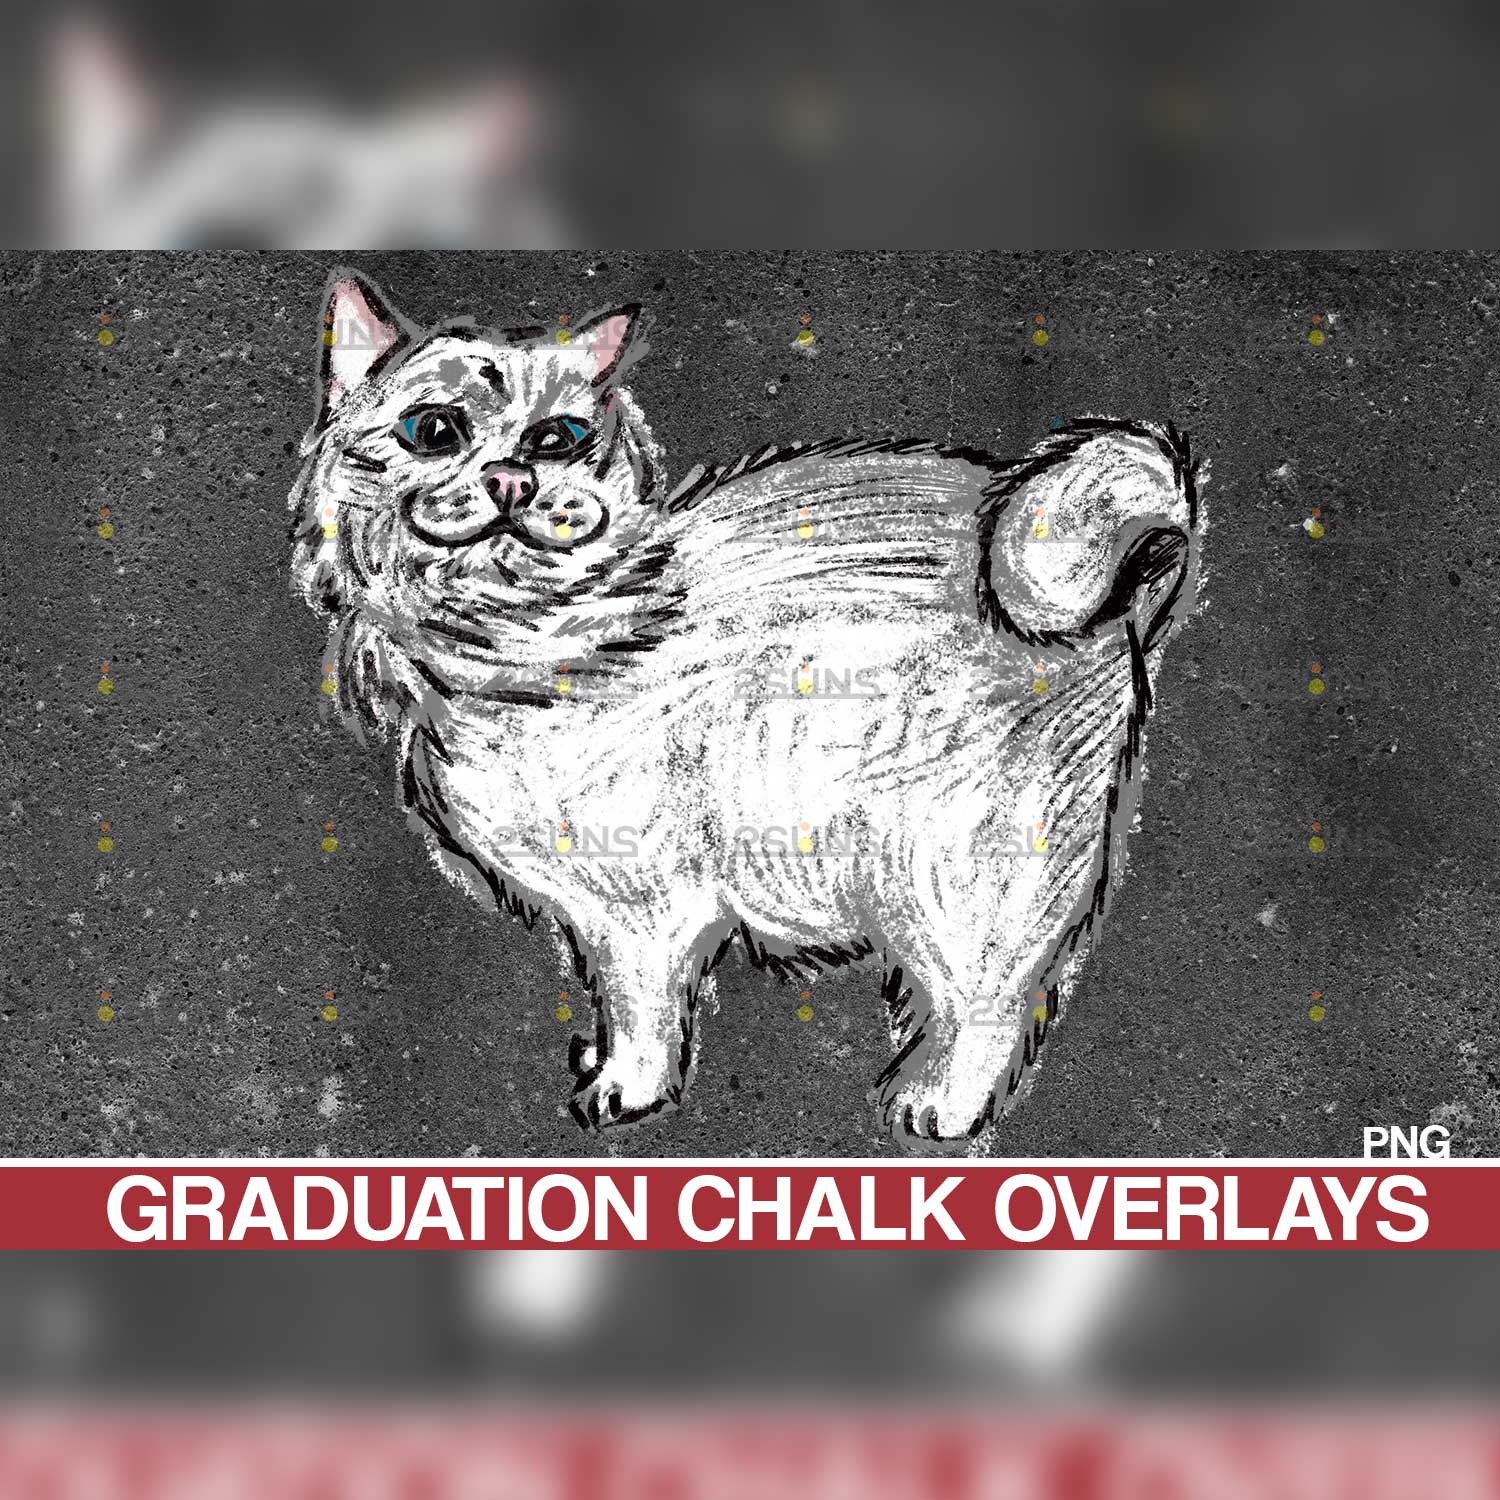 Graduation Sidewalk Chalk Art Overlays Cat.